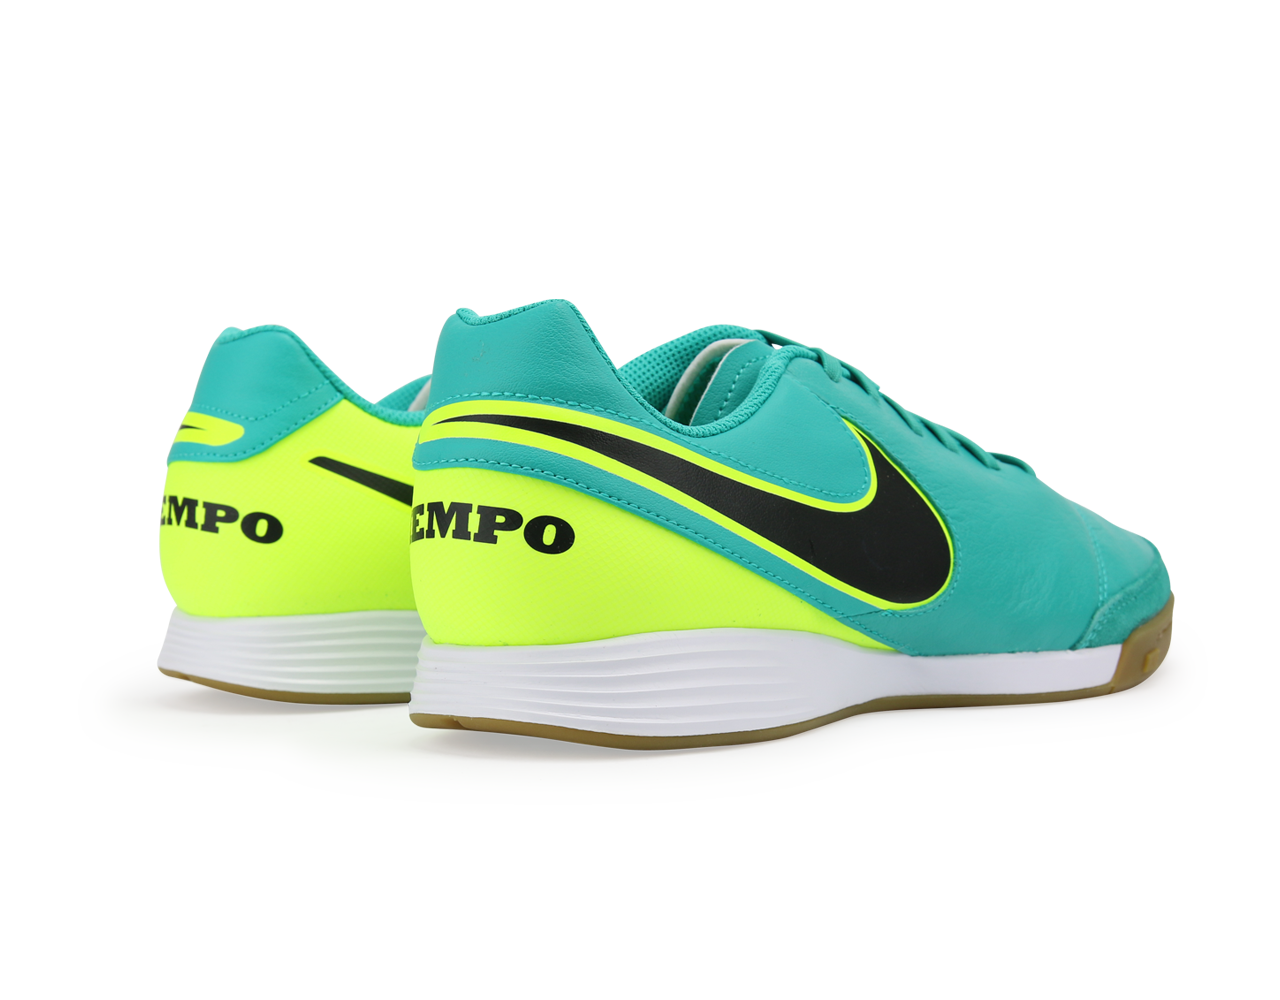 Nike Men's Tiempo Genio II Leather Indoor Soccer Shoes Clear Jade/Black/Volt